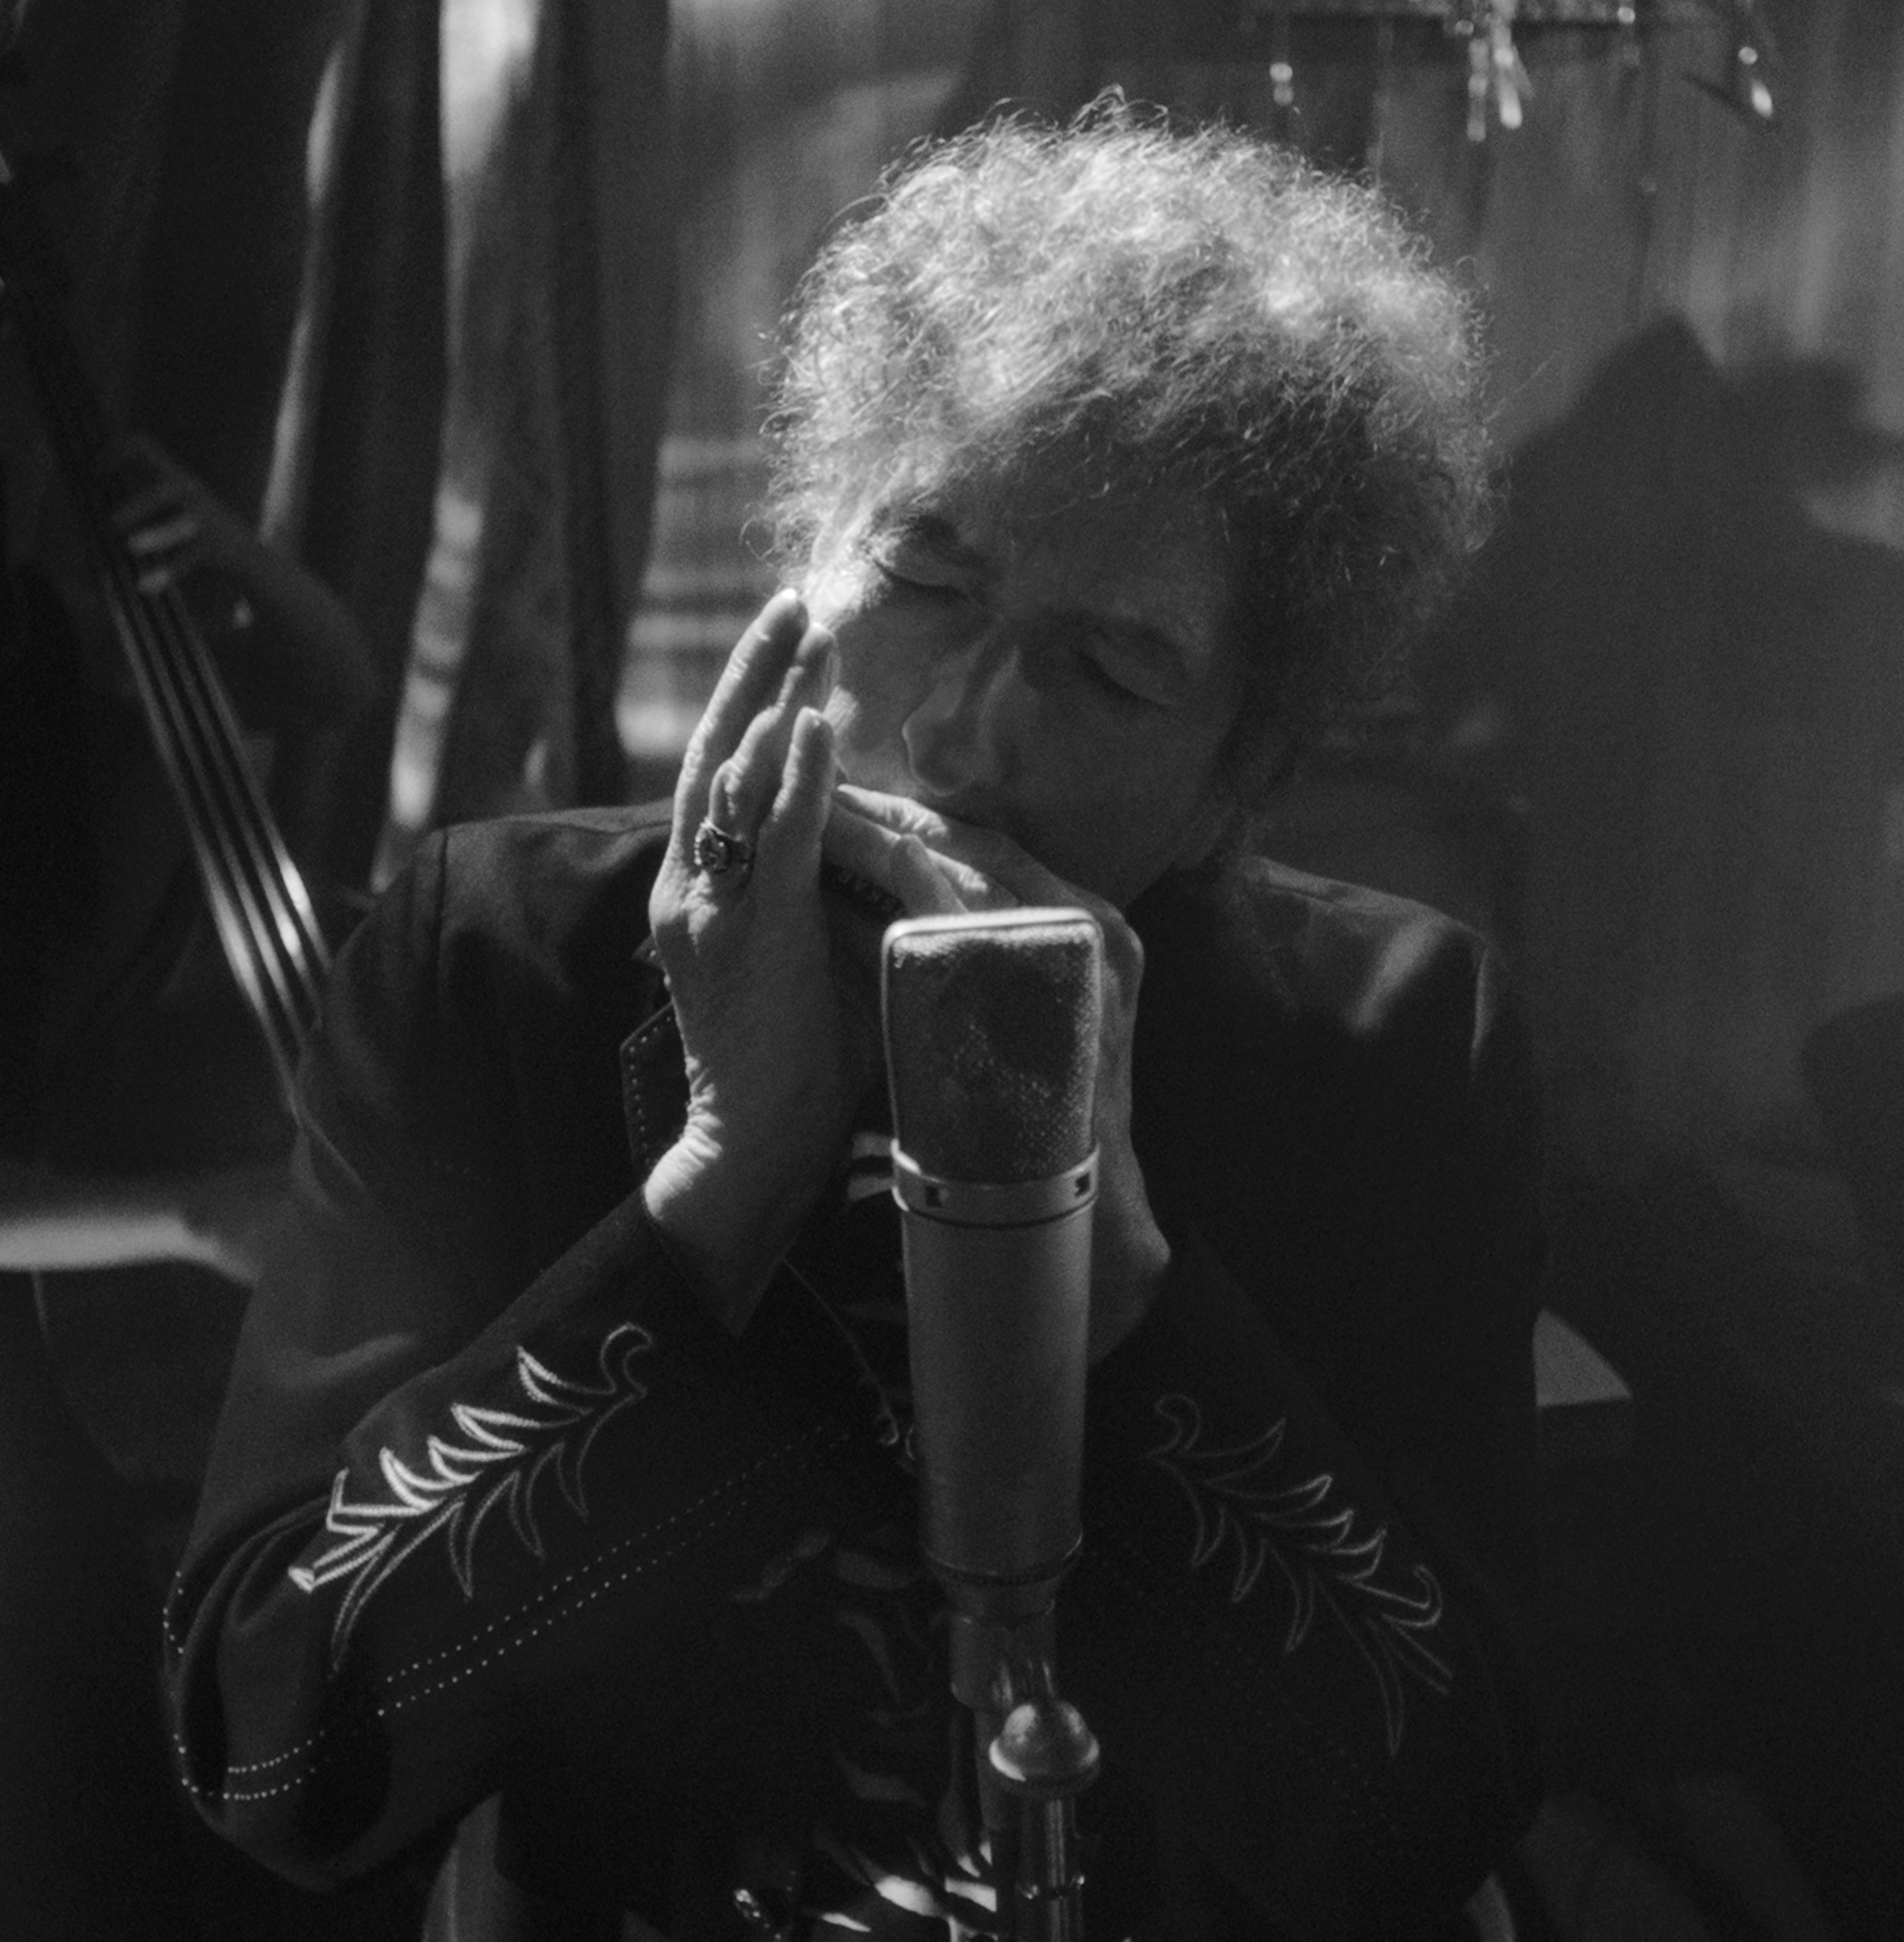 Bob Dylan | ボブ・ディラン 来日公演2023 | Live Nation Japan